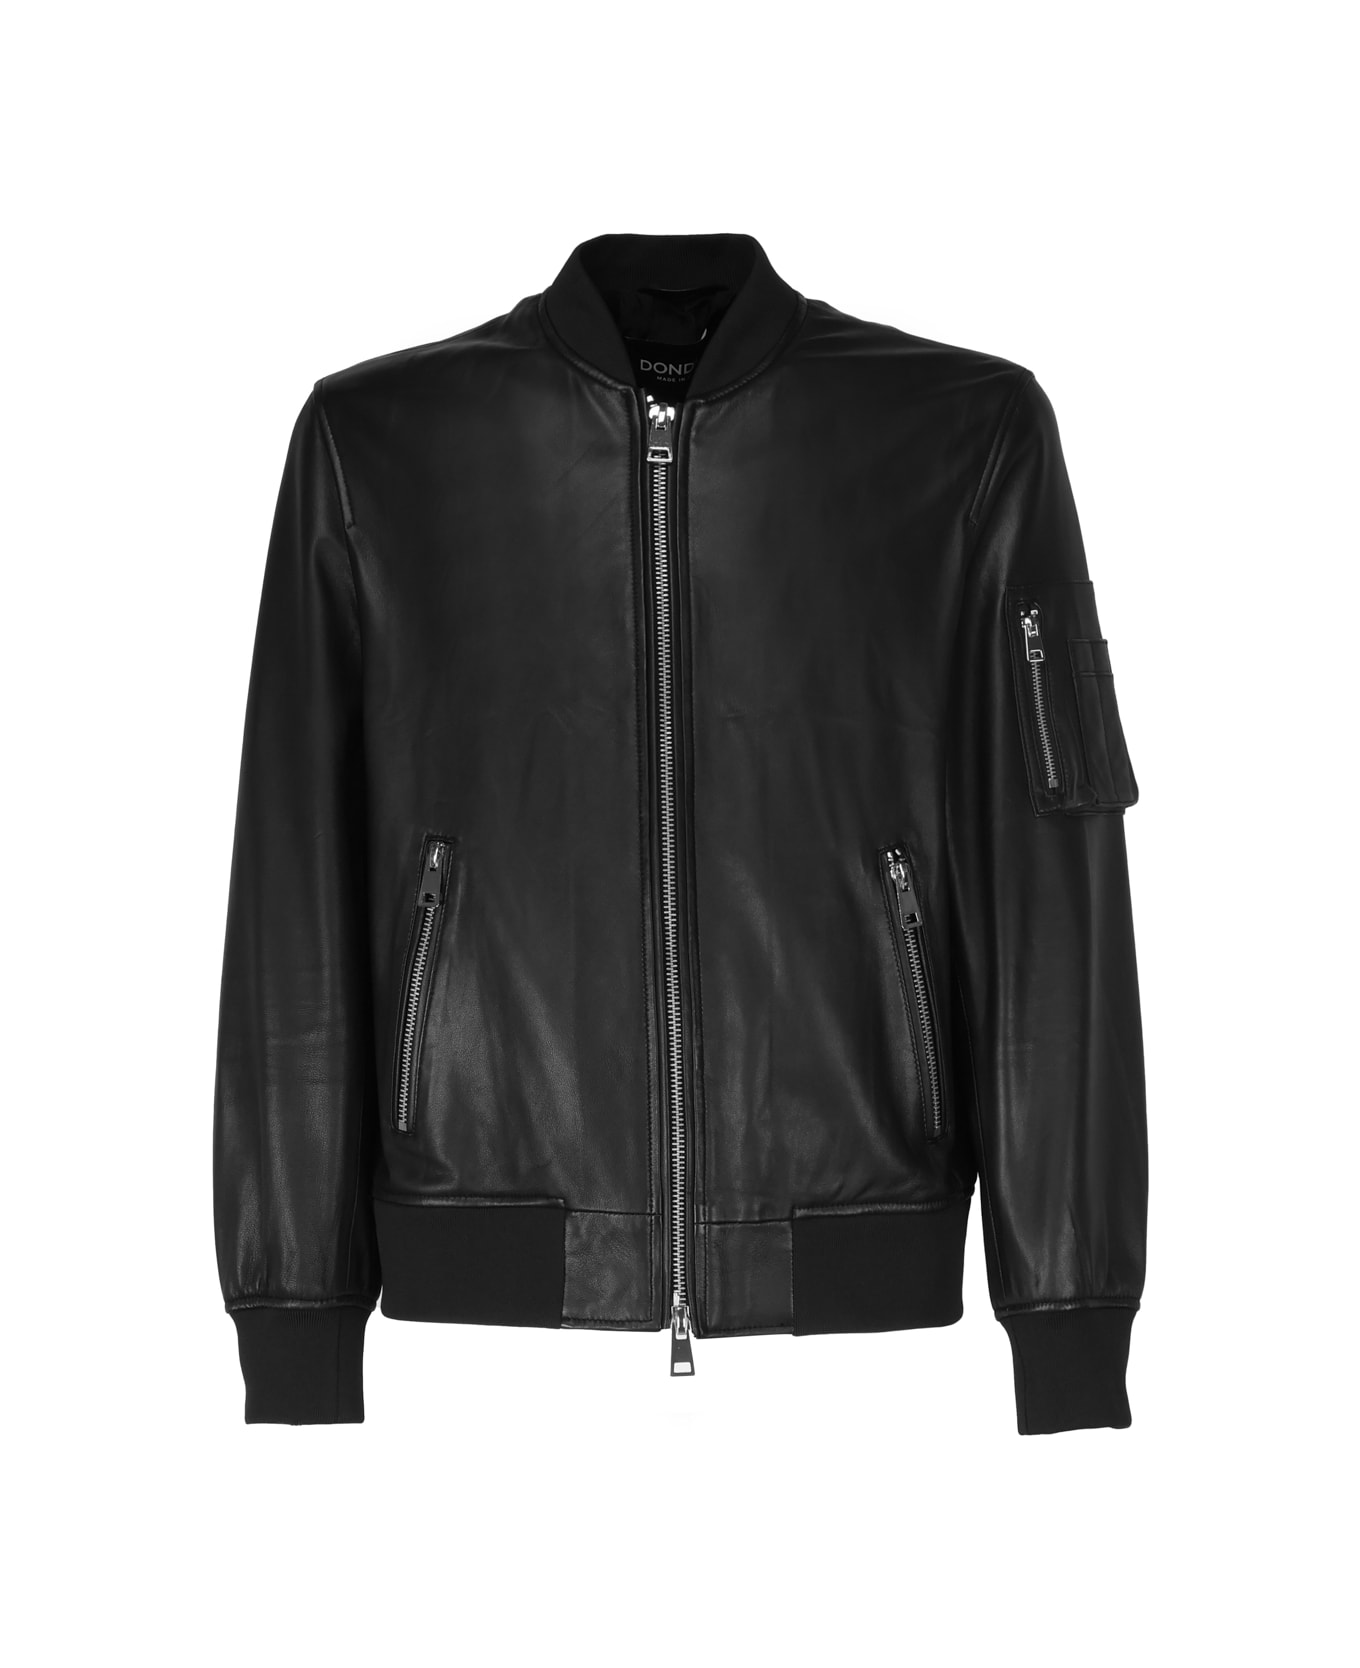 Dondup Leather Jacket With Zip - nero